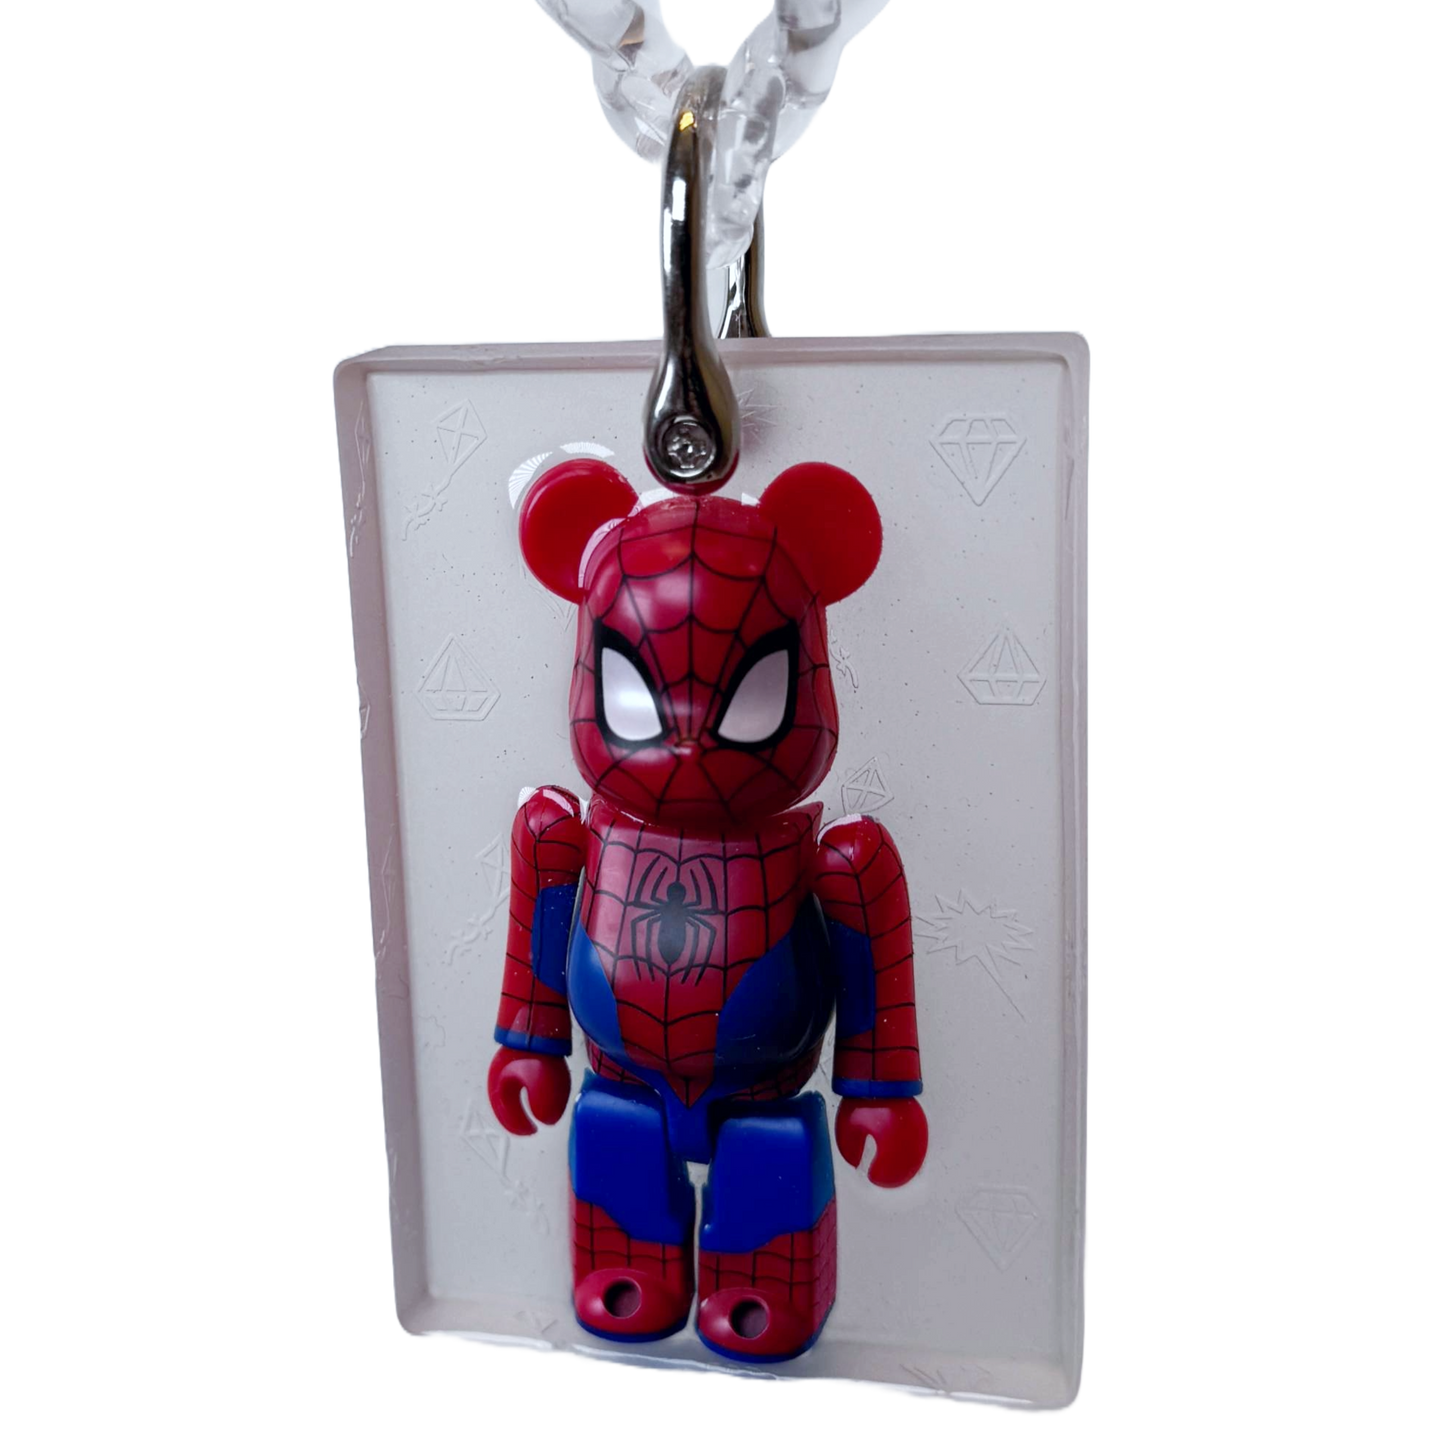 Spider-Man Bearbrick Pendant